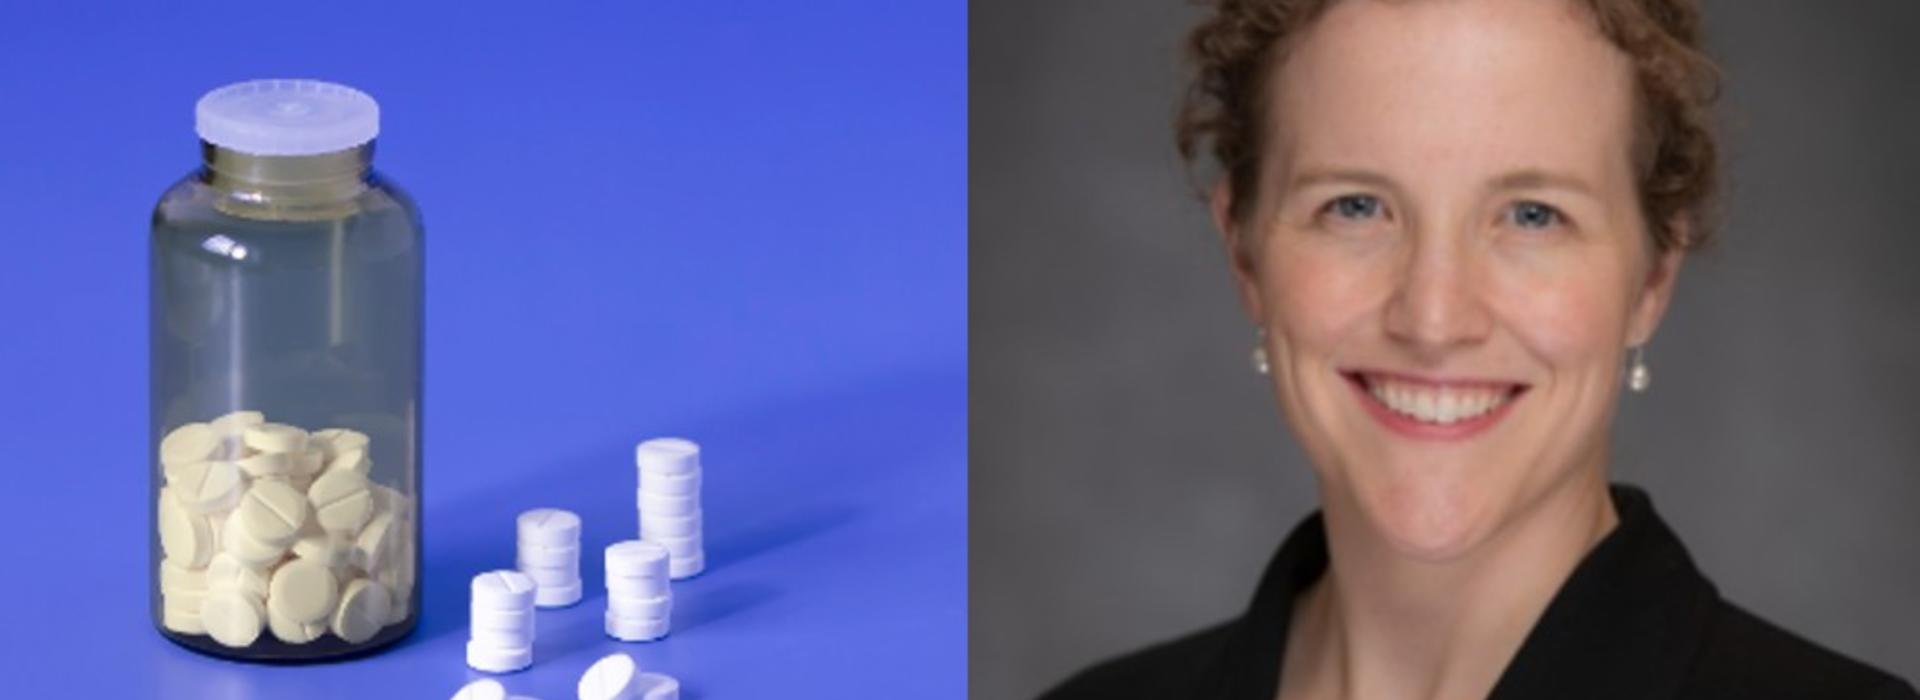 Portrait of Dr. Carolyn Bramante alongside image of pill bottle.